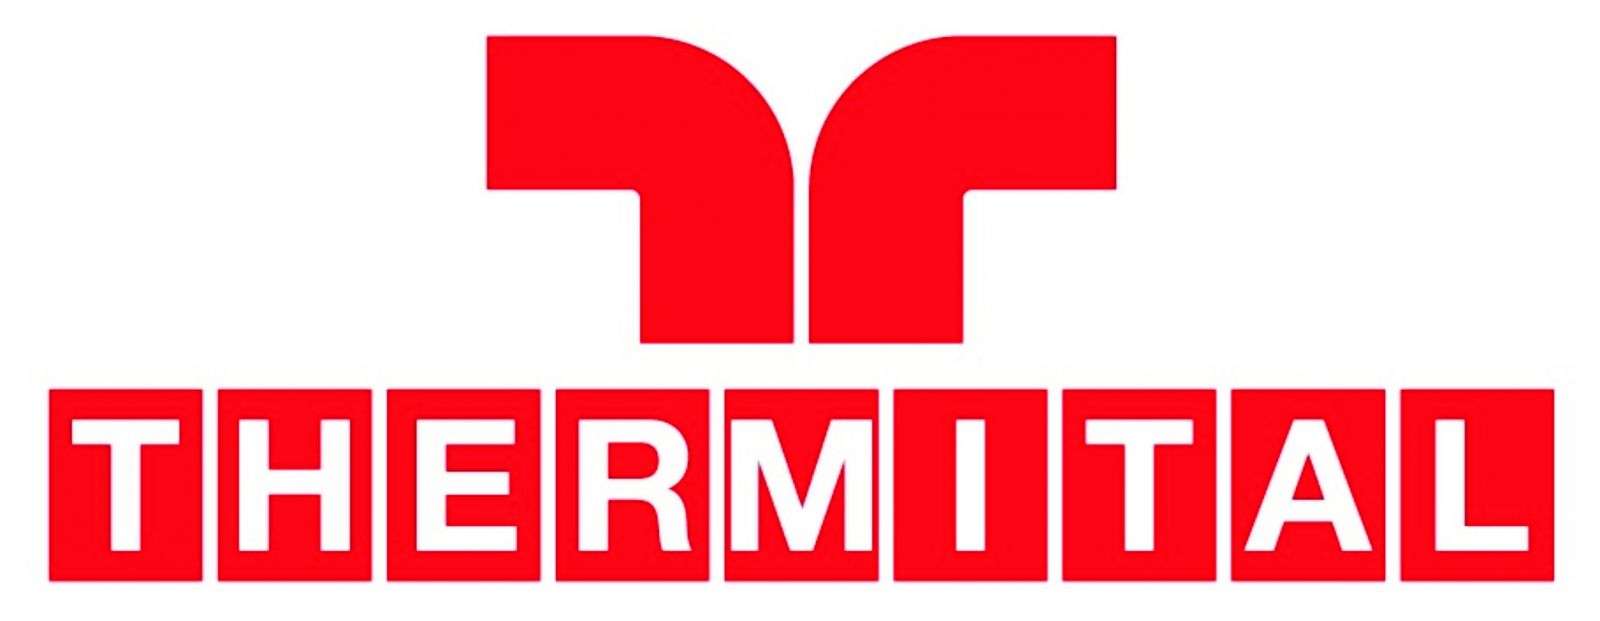 thermital logo